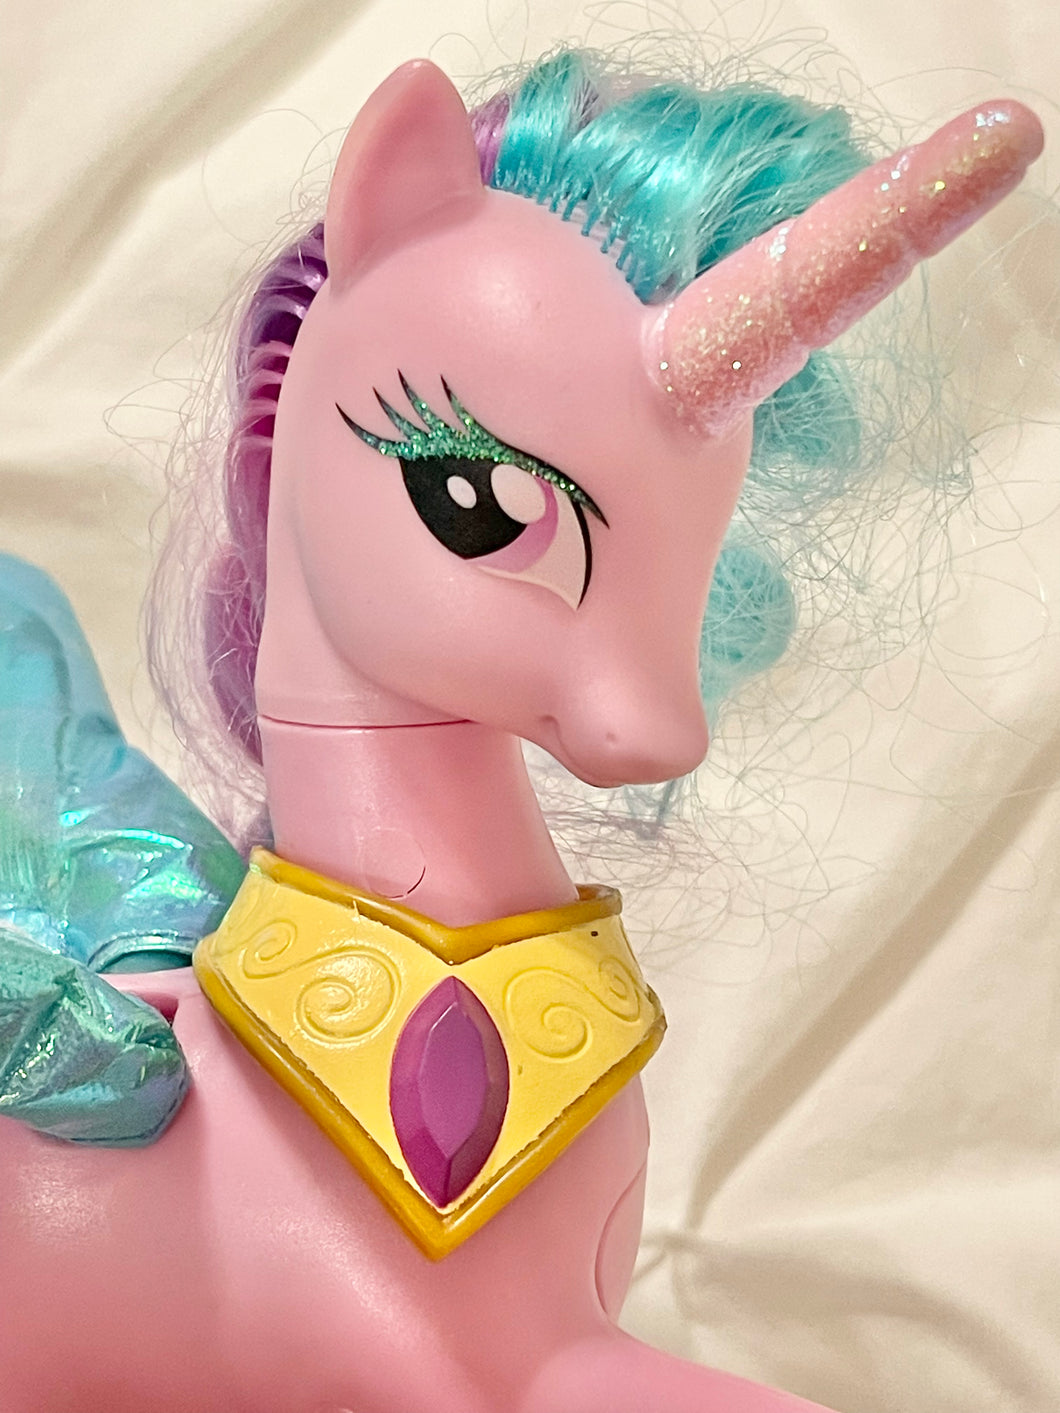 Princess Celestia - talking My Little Pony toy